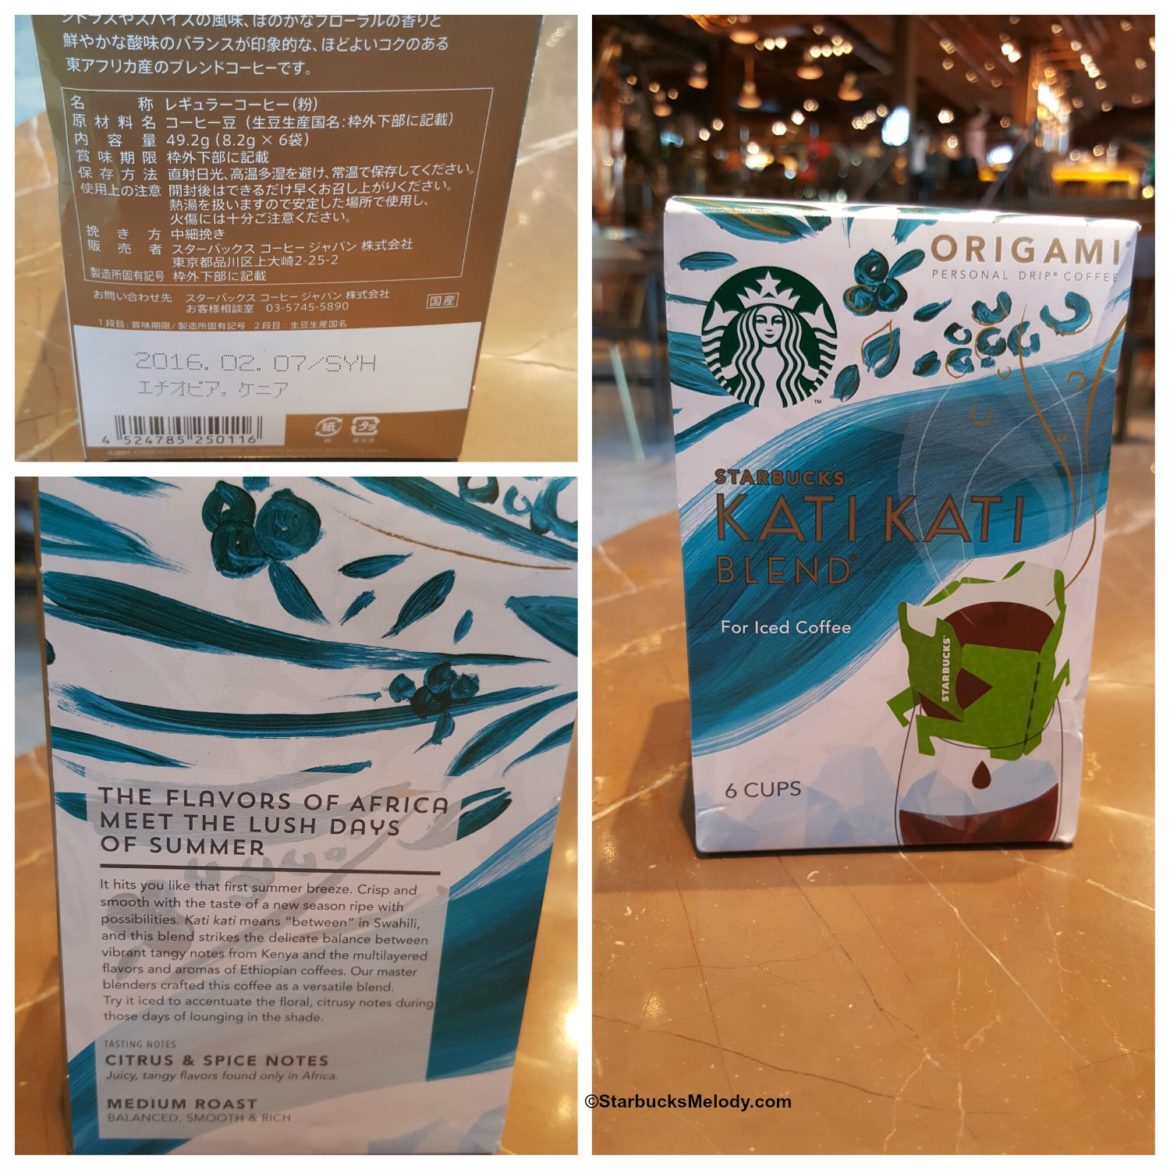 Kati Kati Coffee Returns July 7th! (Origami version available in Starbucks Japan!)